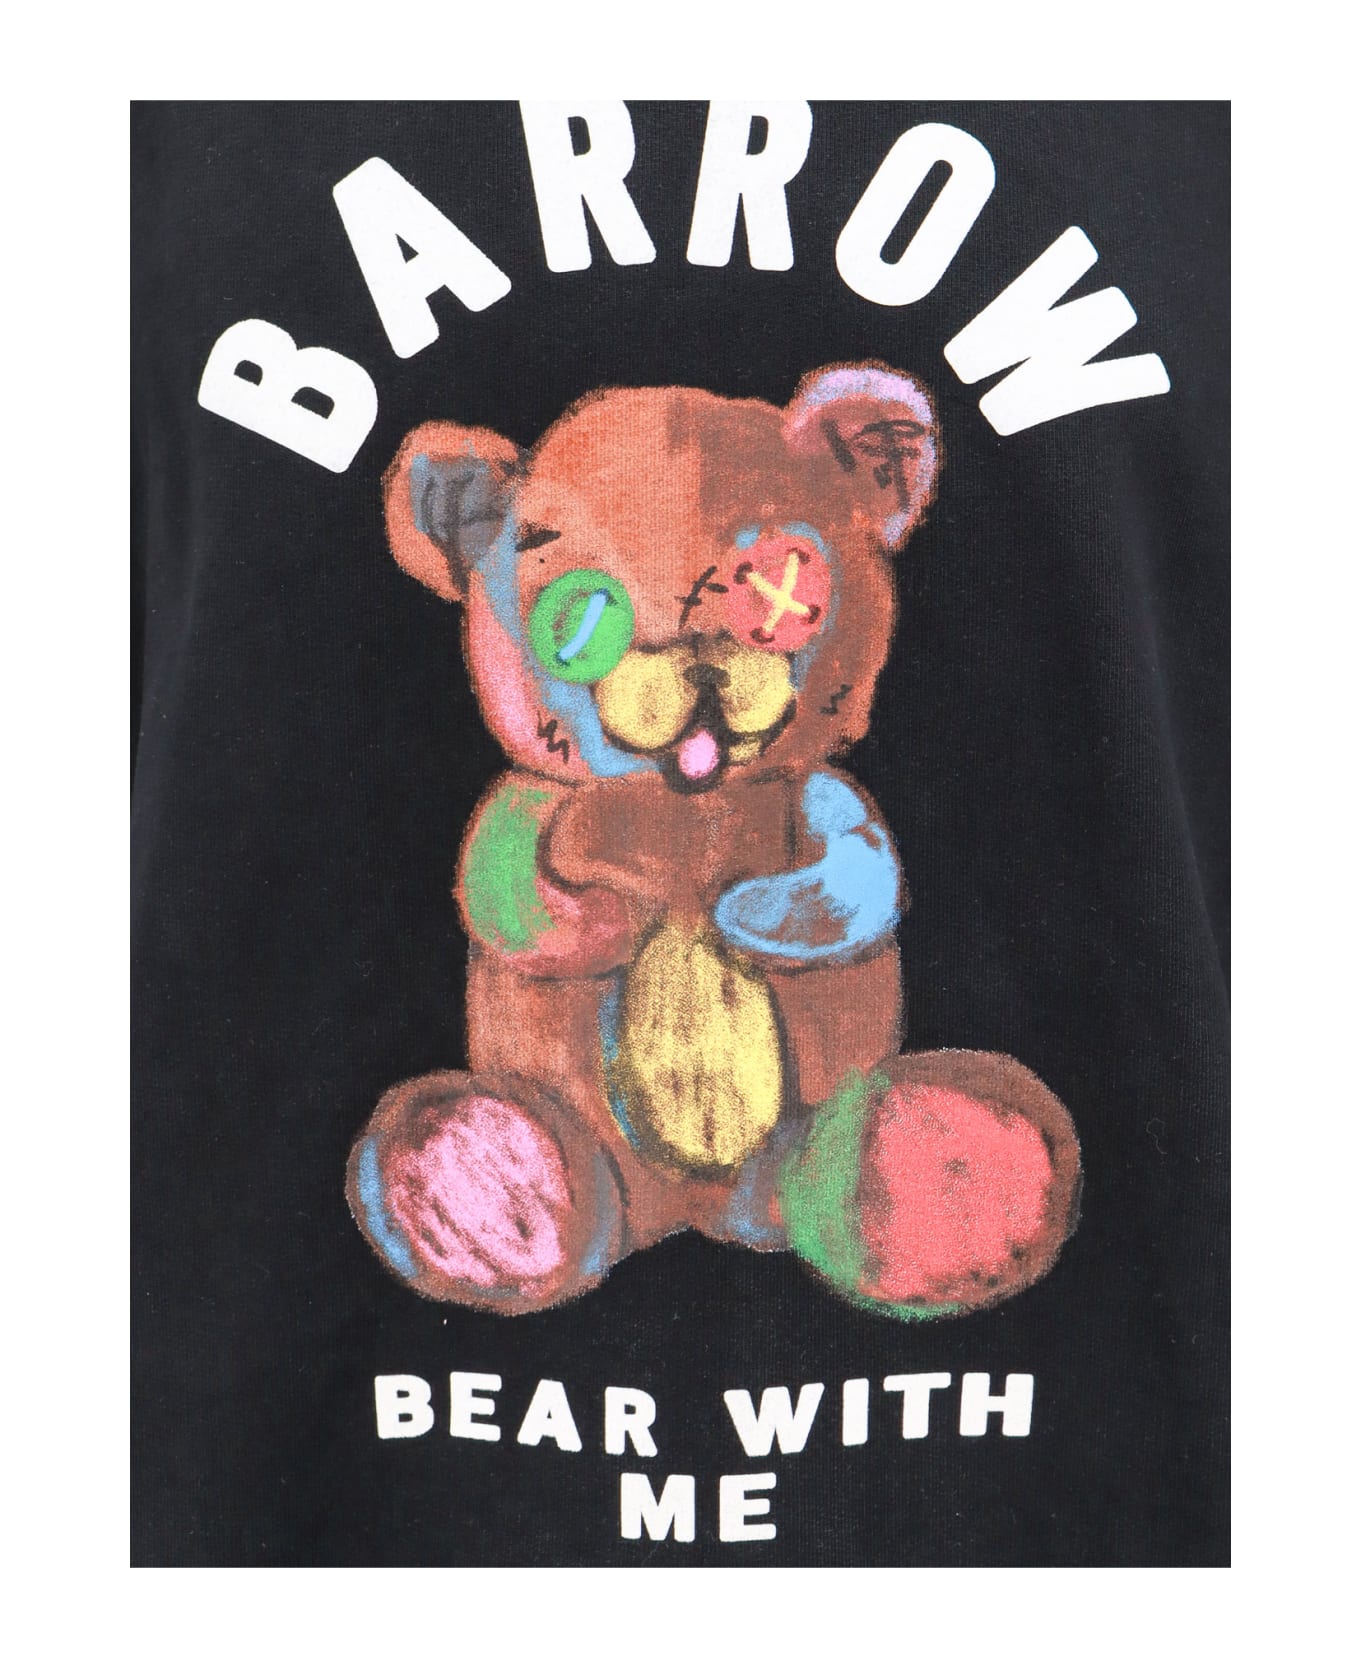 Barrow Sweatshirt - MultiColour